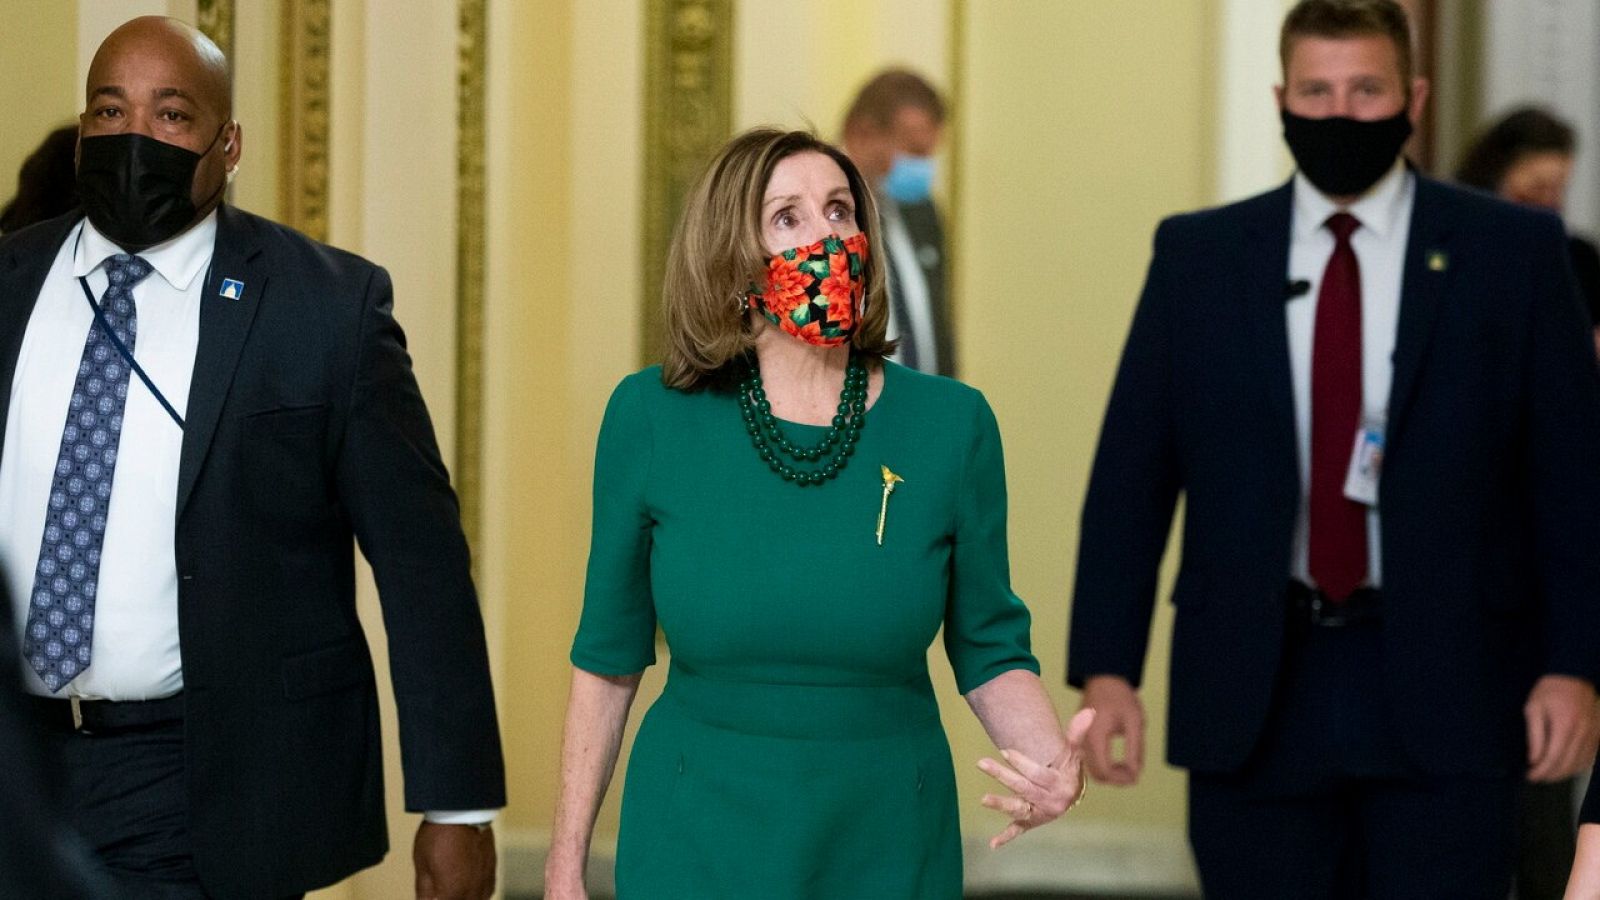 La presidenta de la Cámara de representantes Nancy Pelosi